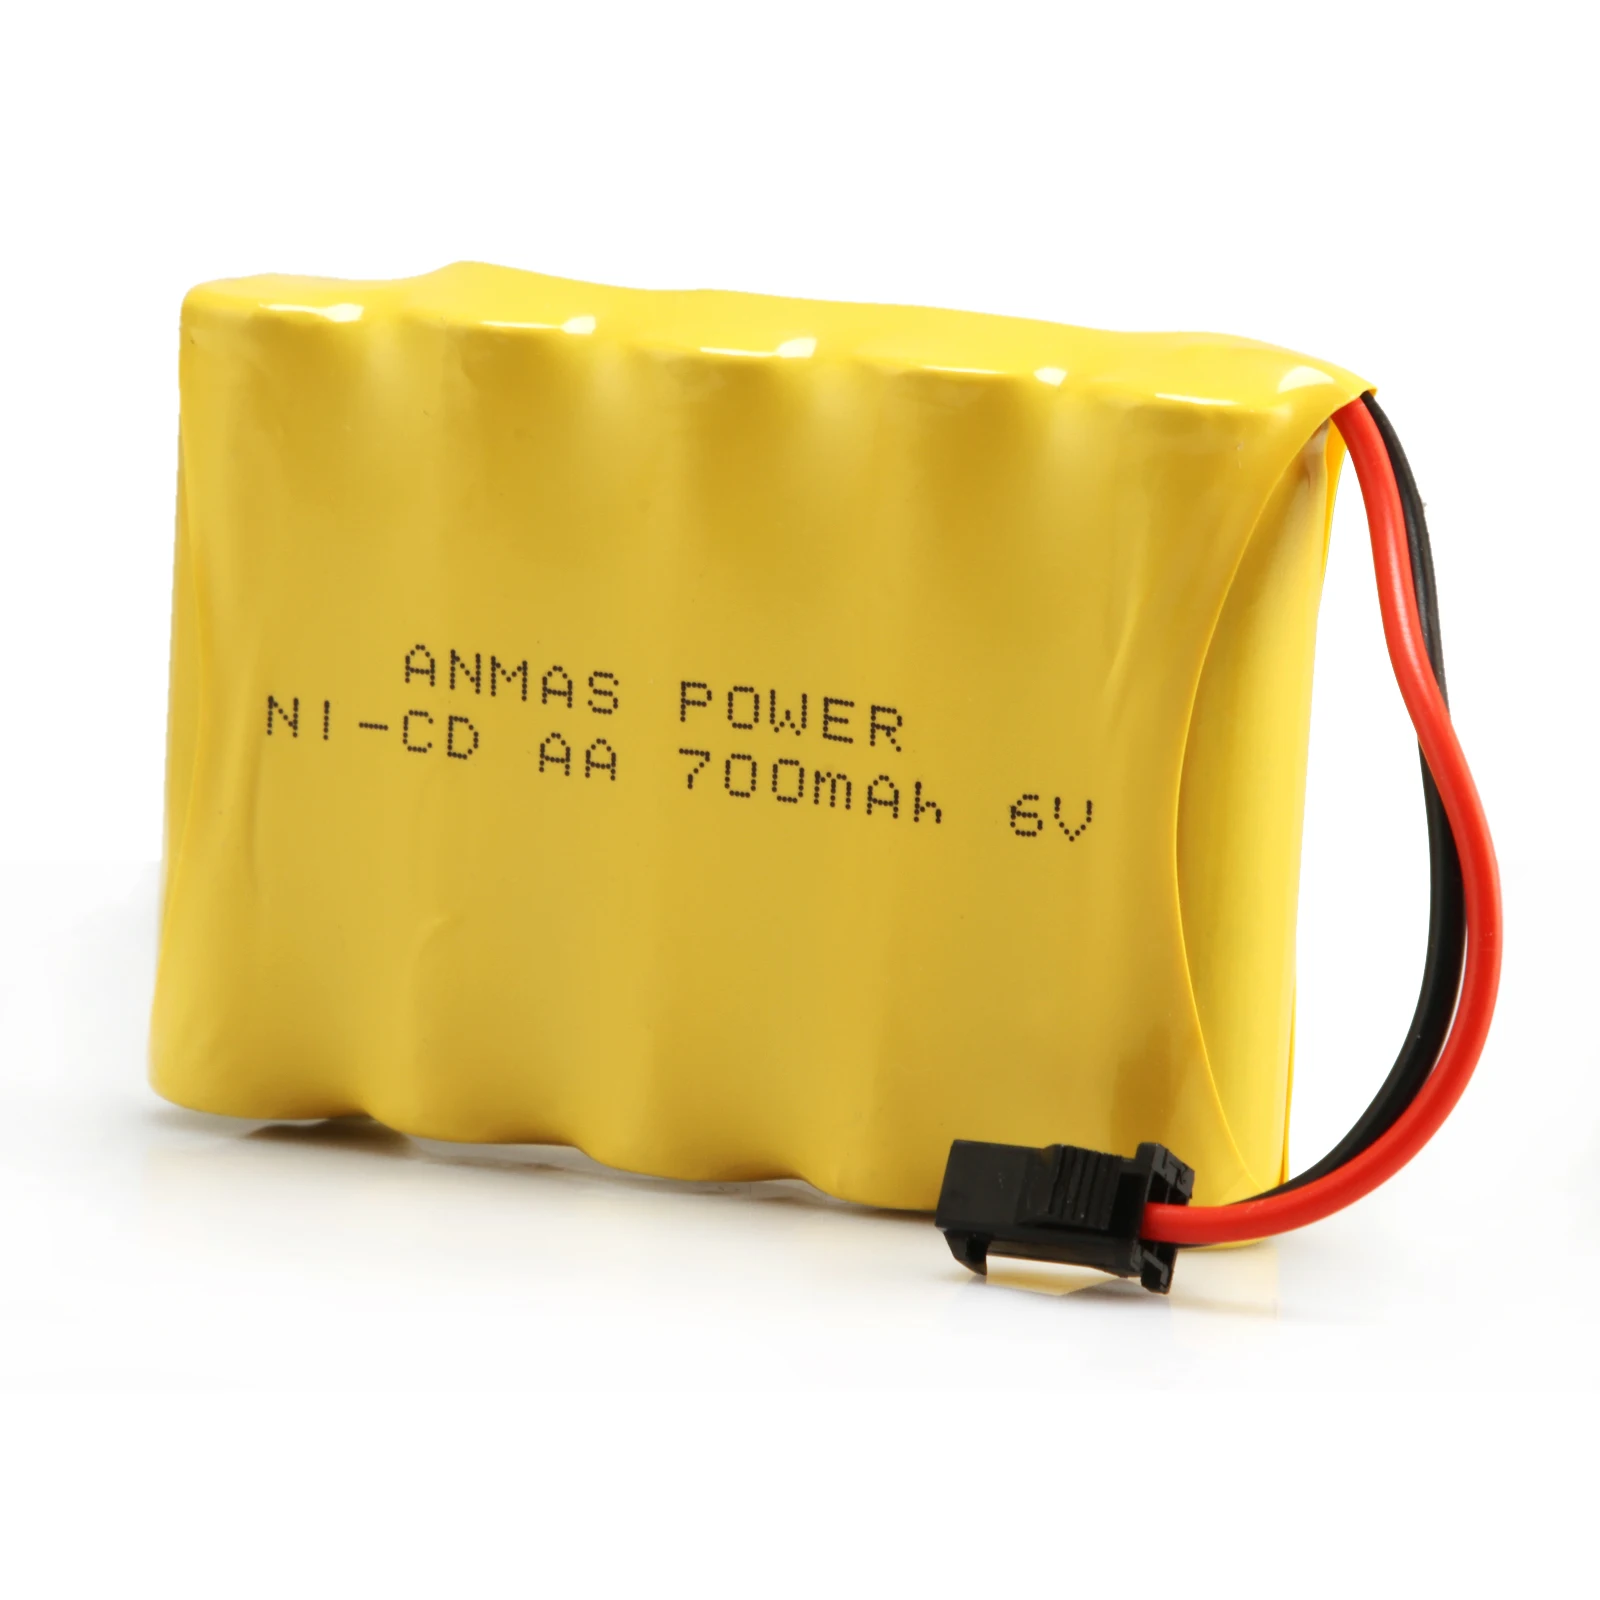 Anmas power 700mAh 6V AA батарея NI-CD NICD батареи SM Plug перезаряжаемые AA аккумуляторные блоки Pilhas Recarregaveis